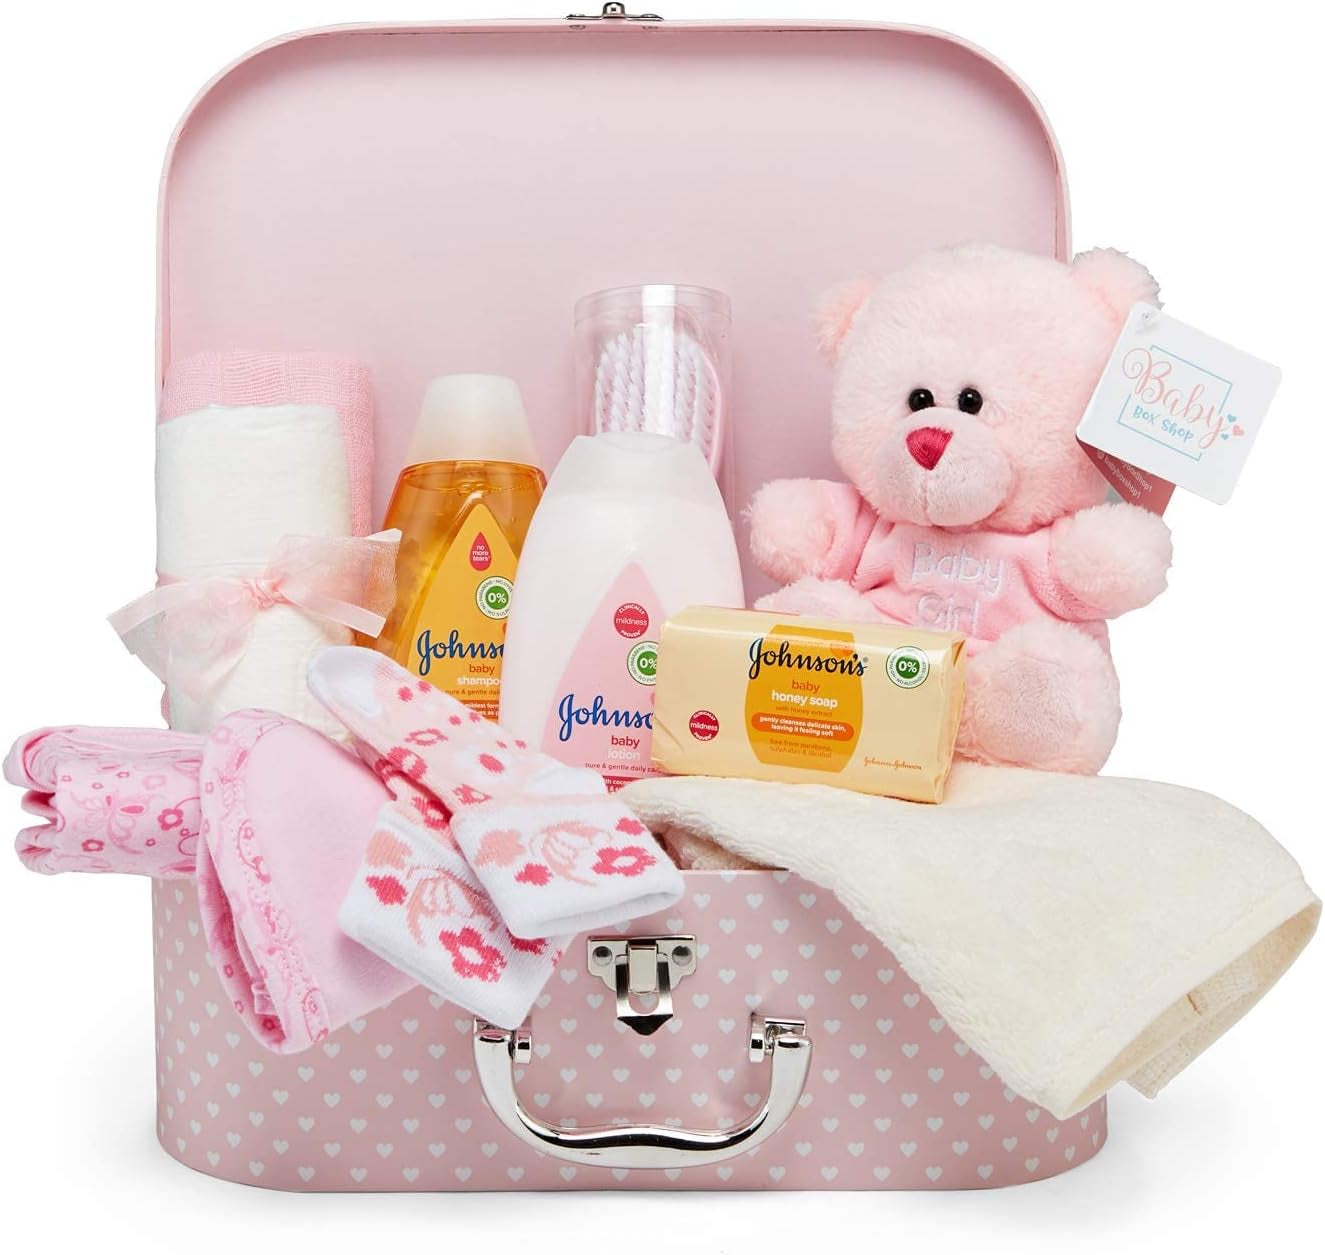 Baby Newborn Baby Gifts - Baby Hamper Cream Includes Baby Essentials for Newborn, Teddy Bear, New Born Baby Essentials, New Baby Gifts